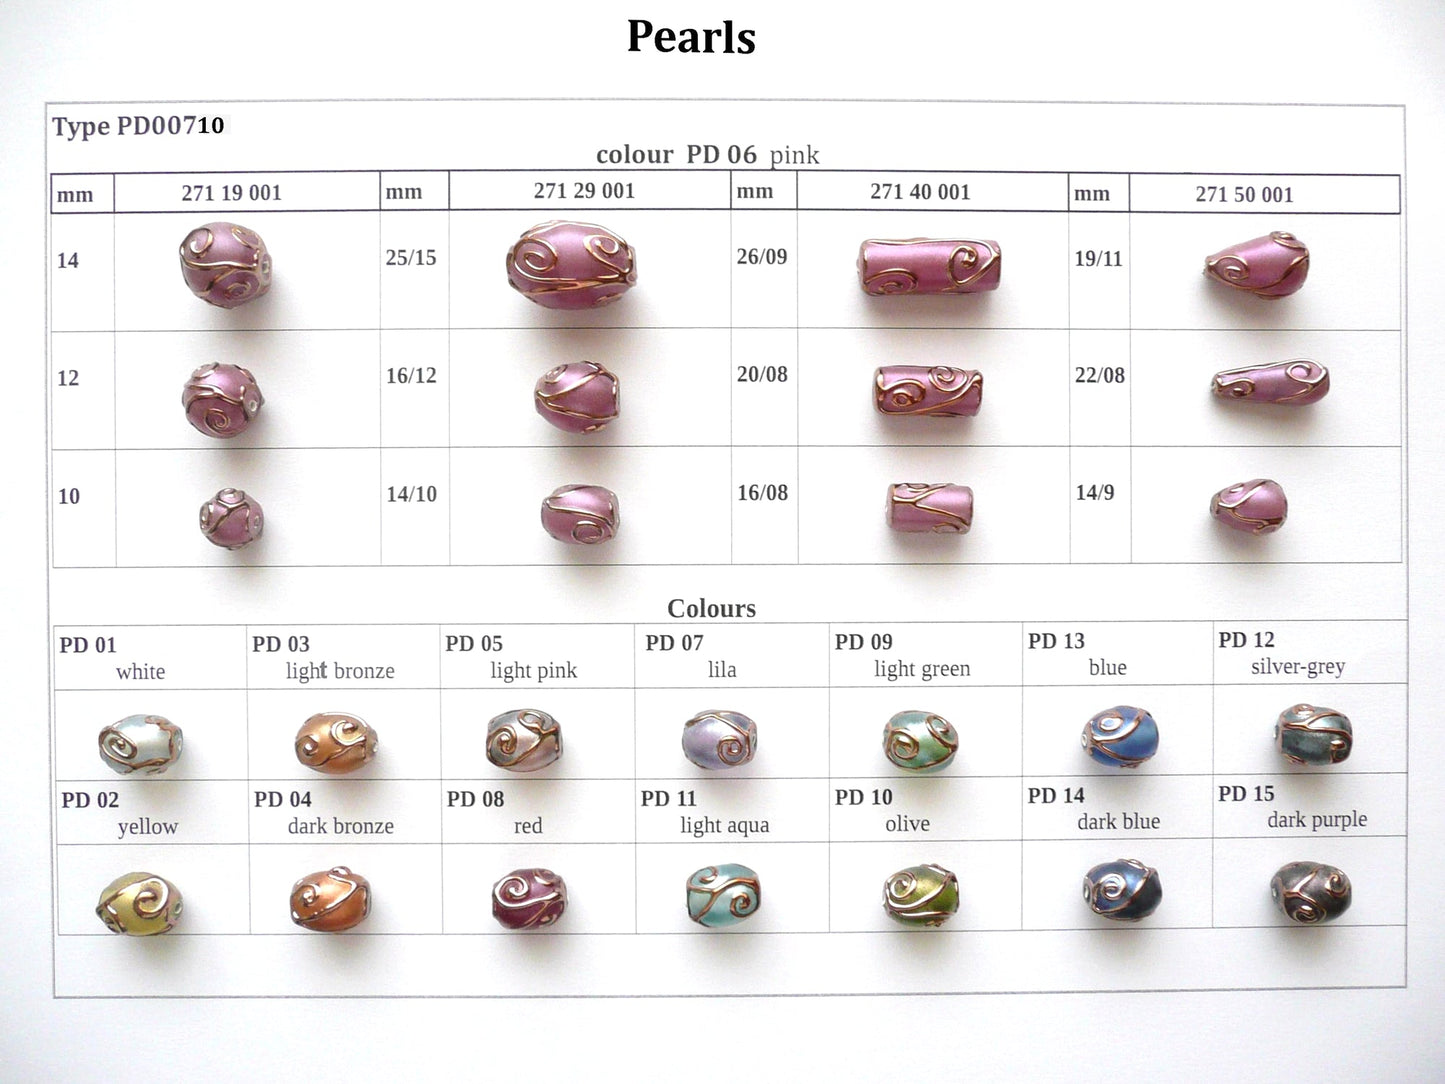 30 pcs Lampwork Beads Pearl Decor PD710 / Oval (271-29-001), Handmade, Preciosa Glass, Czech Republic